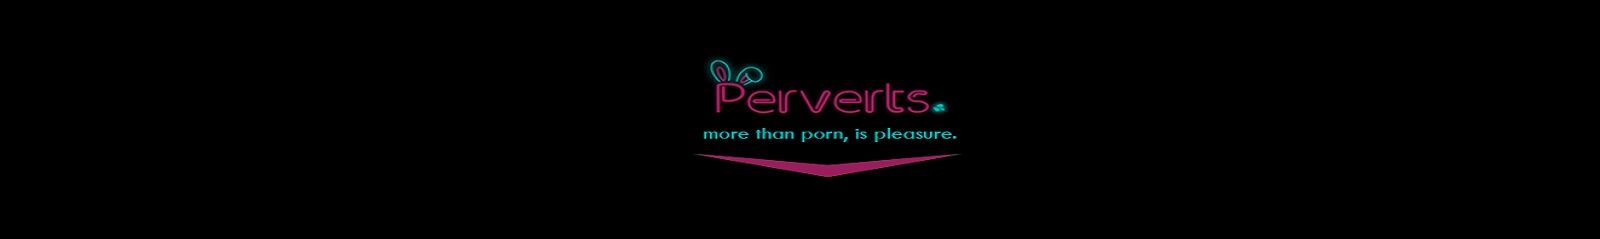 Moon perverts